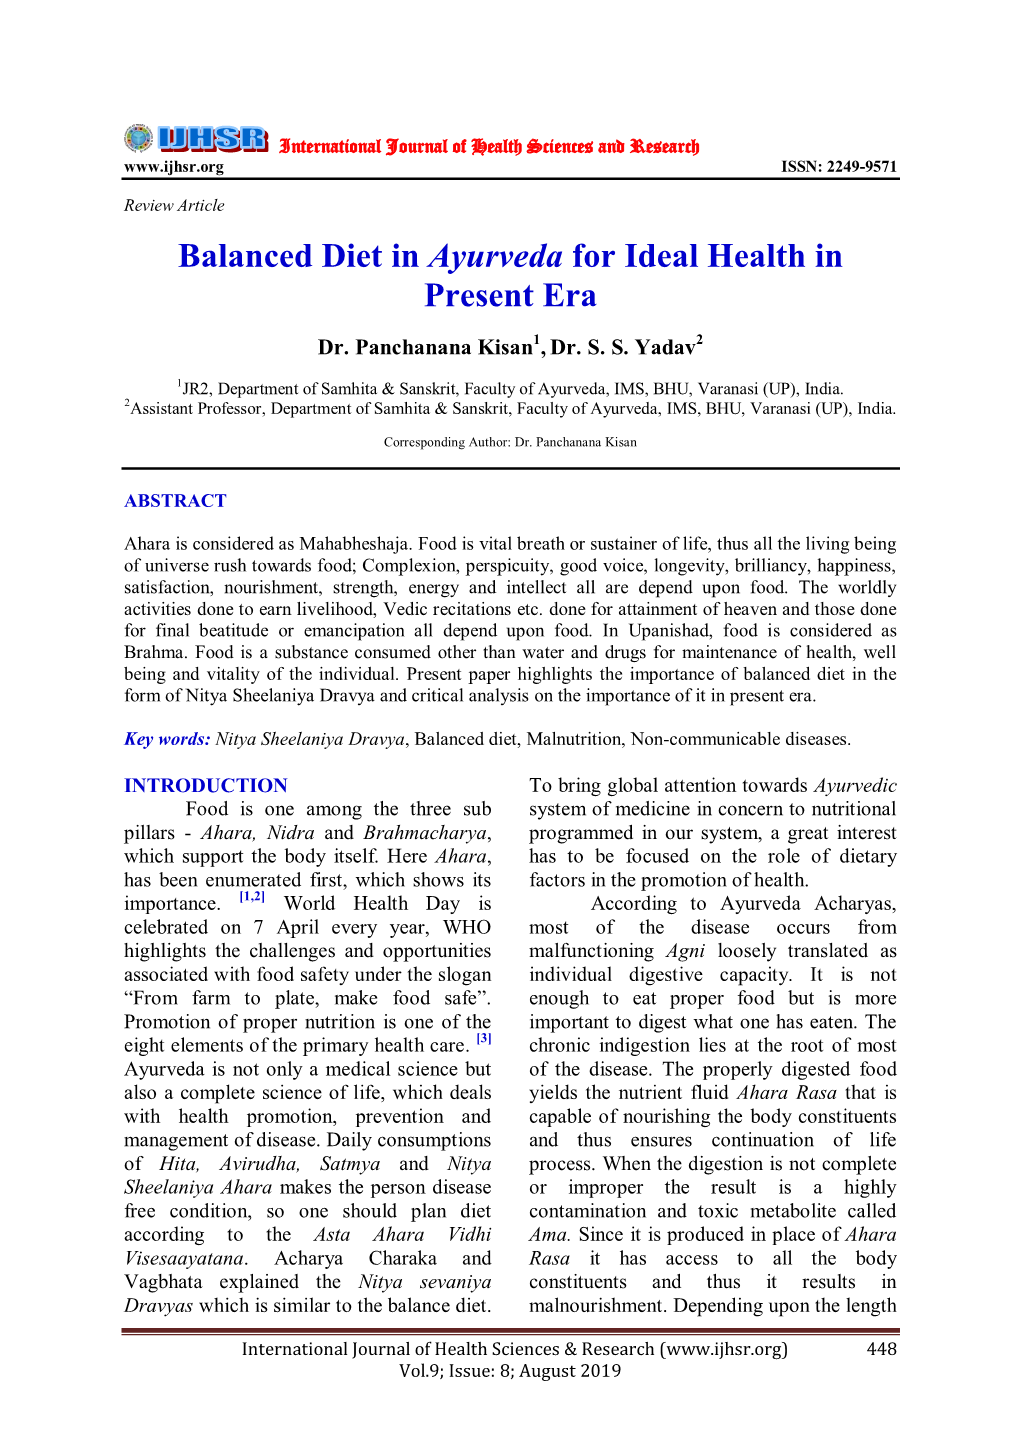 Balanced Diet in Ayurveda for Ideal Health in Present Era